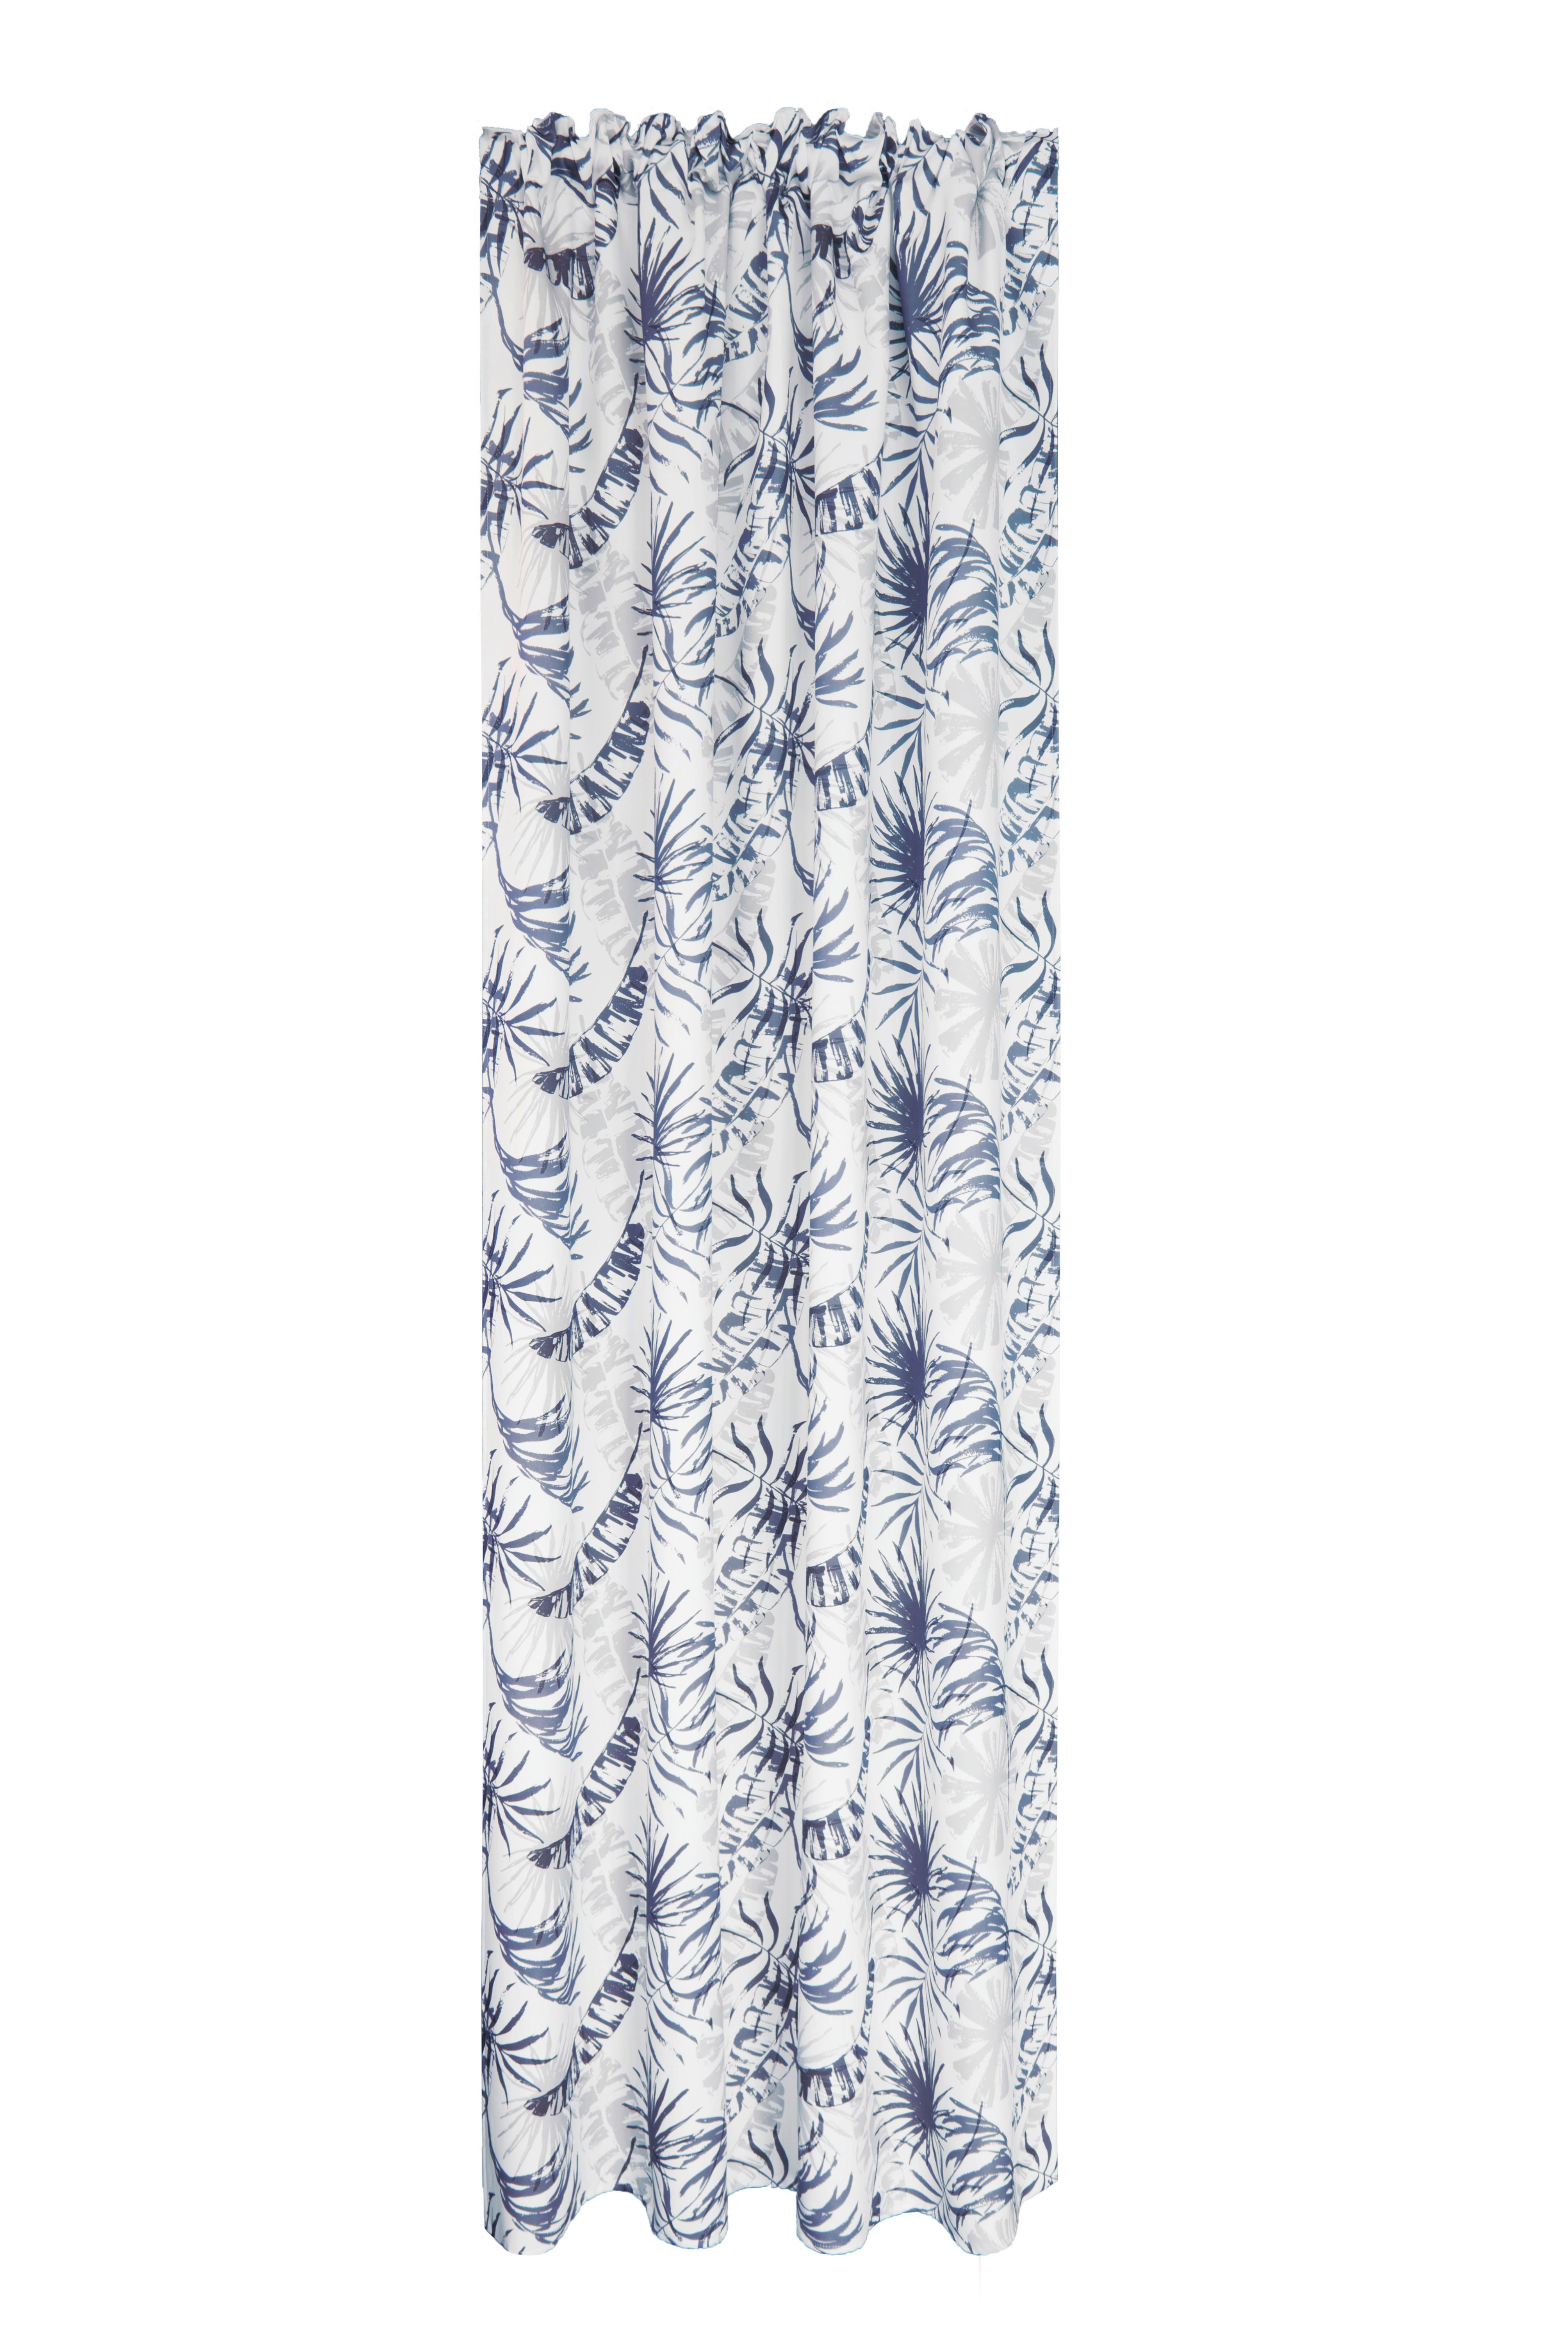 Fertigvorhang Nele - Blau, ROMANTIK / LANDHAUS, Textil (140/245cm) - James Wood